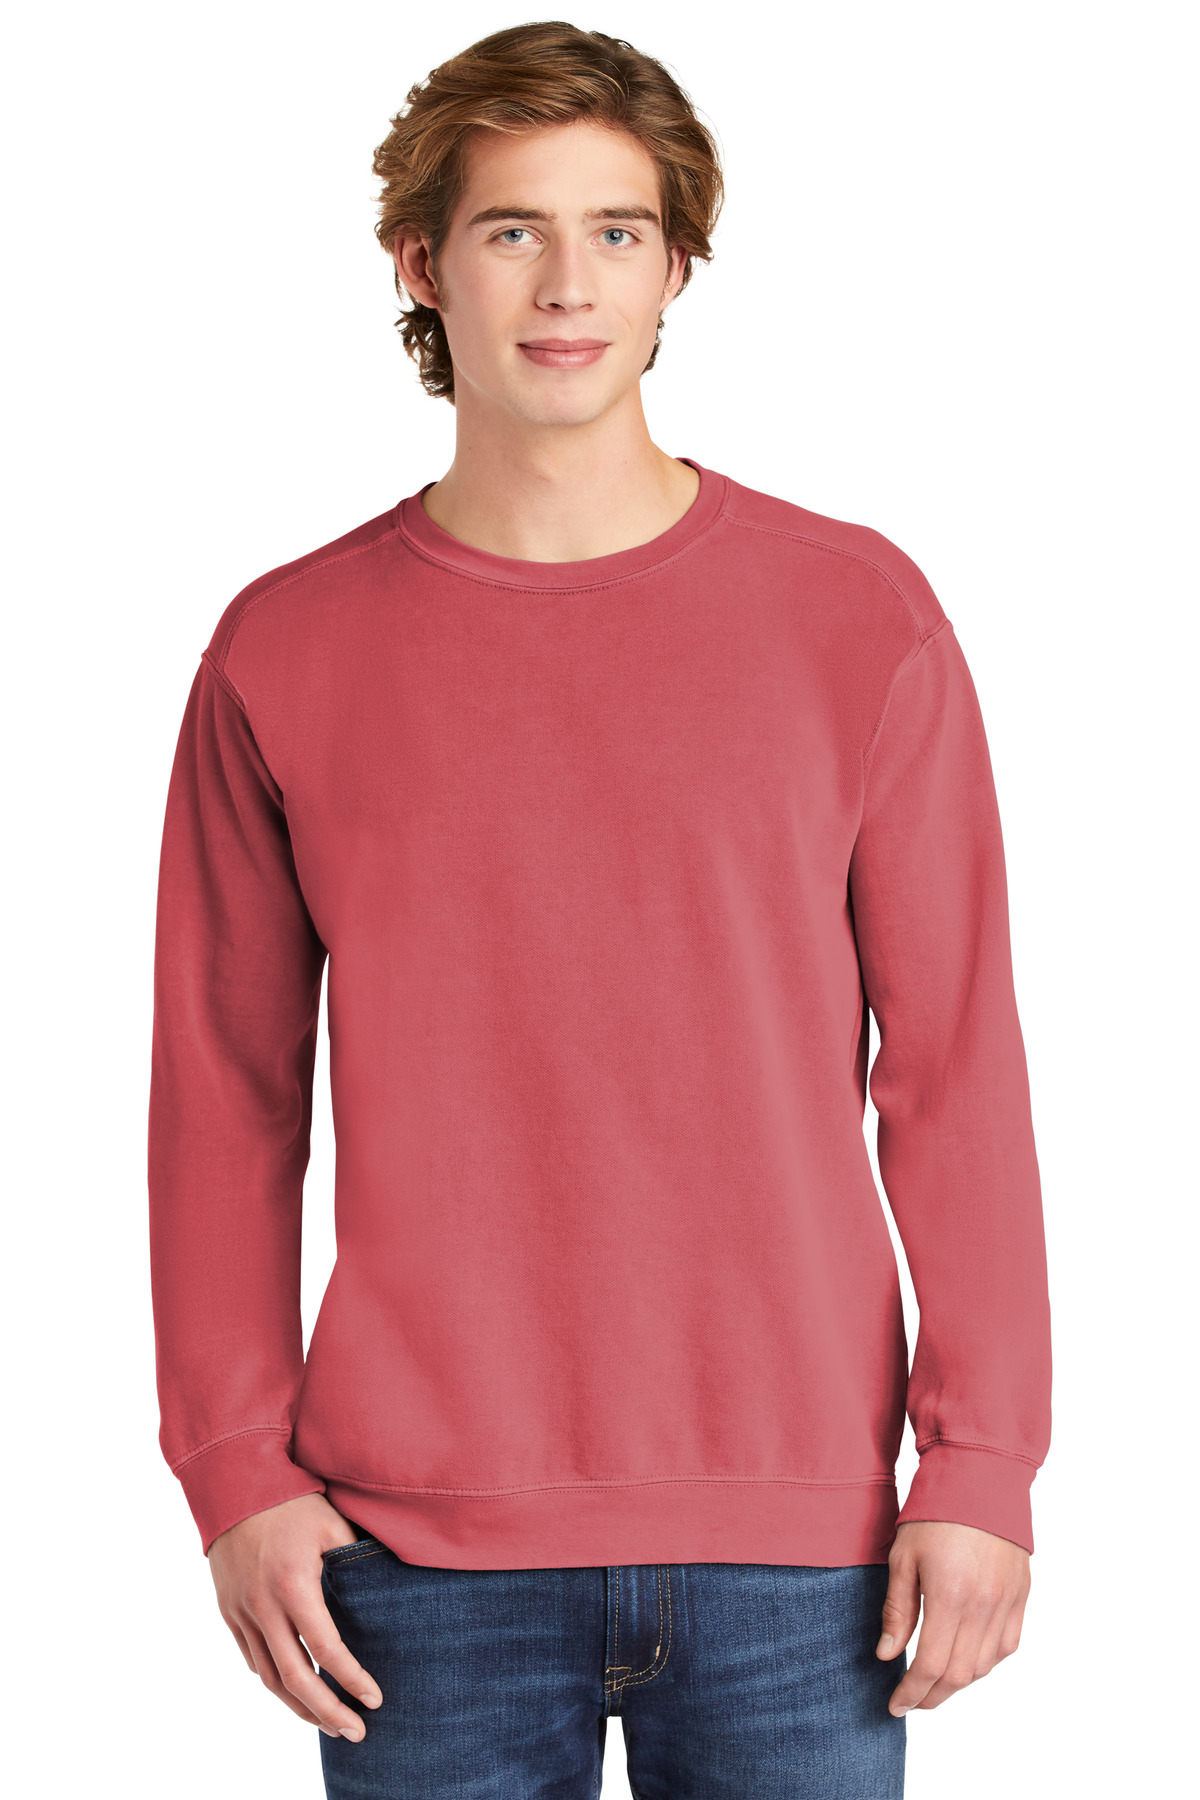 COMFORT COLORS Ring Spun Crewneck Sweatshirt-Comfort Colors